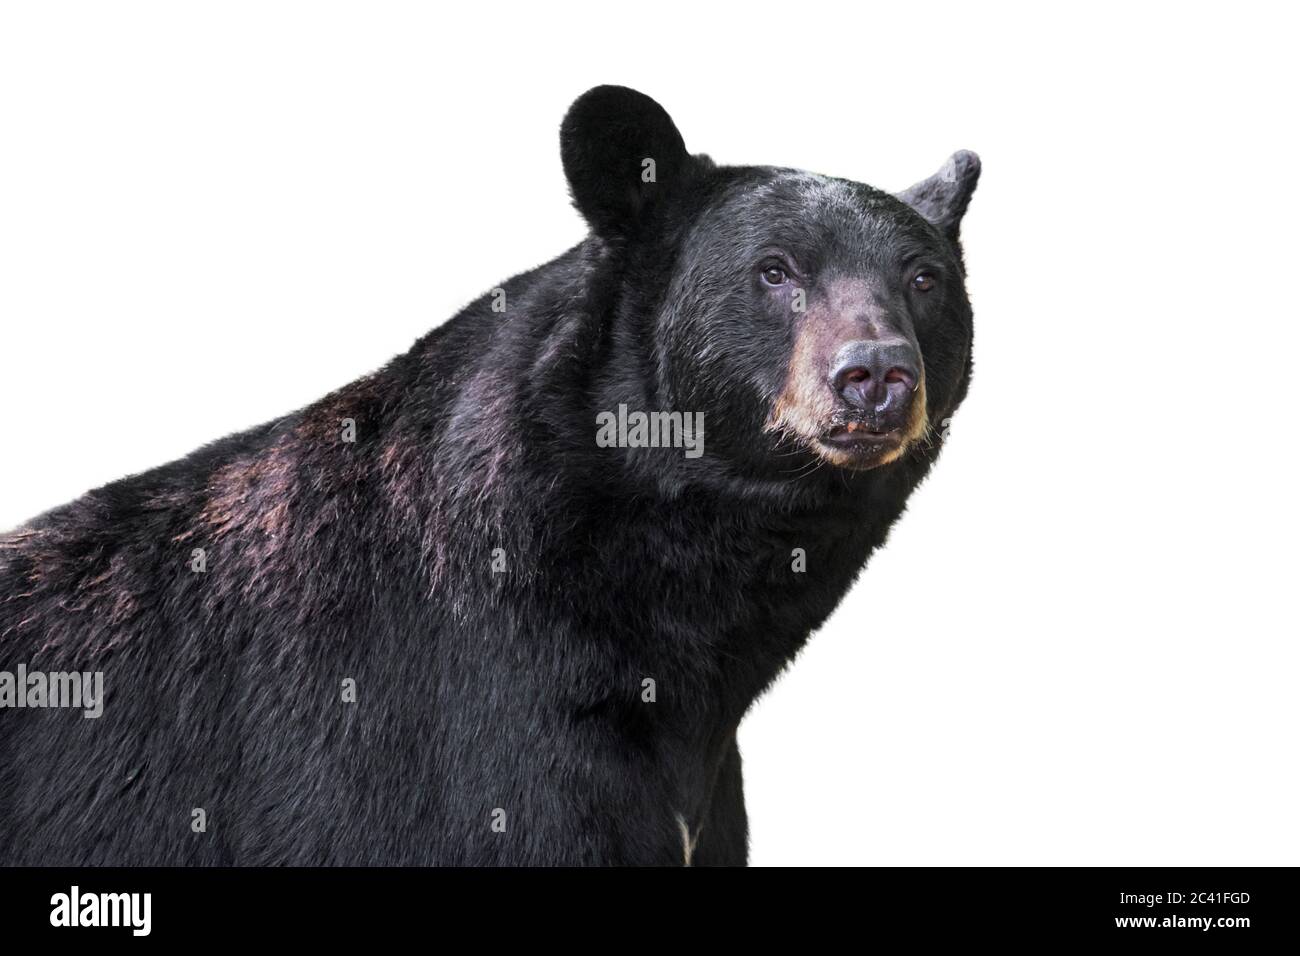 American black bear (Ursus americanus) close-up portrait against white background Stock Photo